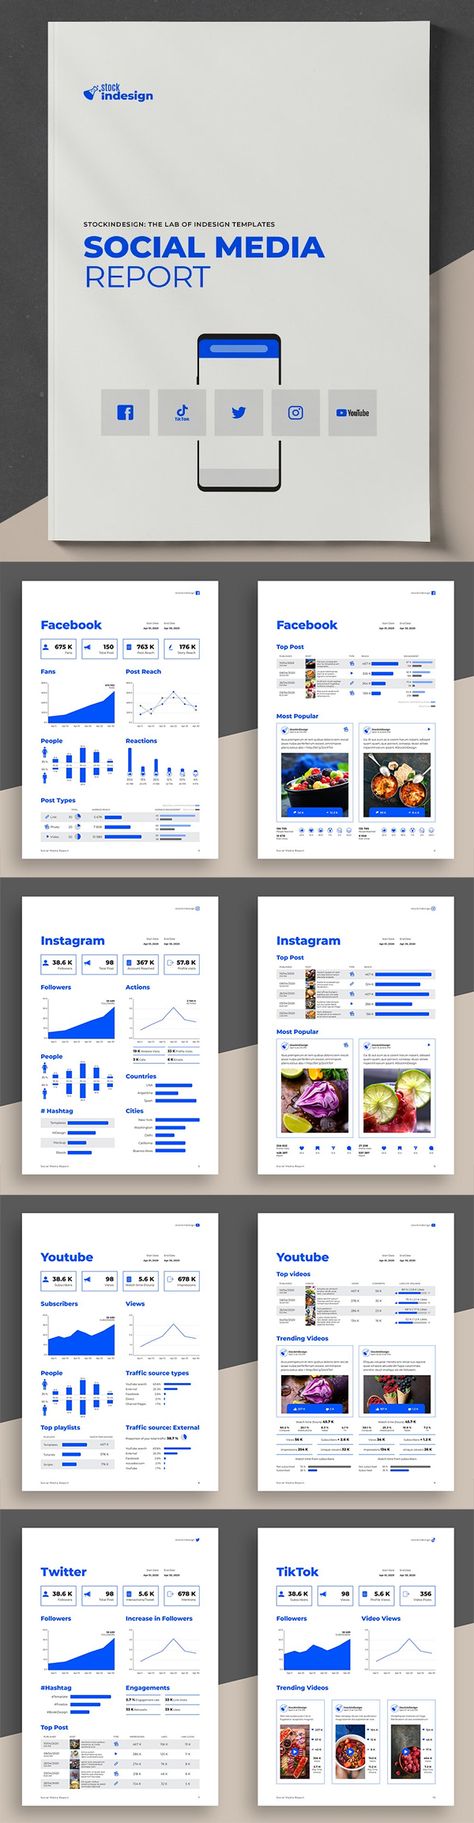 Social Media Annual Report Design Template Inspiration, Design, Web Design, Instagram, Marketing Report Layout, Marketing Report Design, Social Media Infographic, Social Media Template, Marketing Report